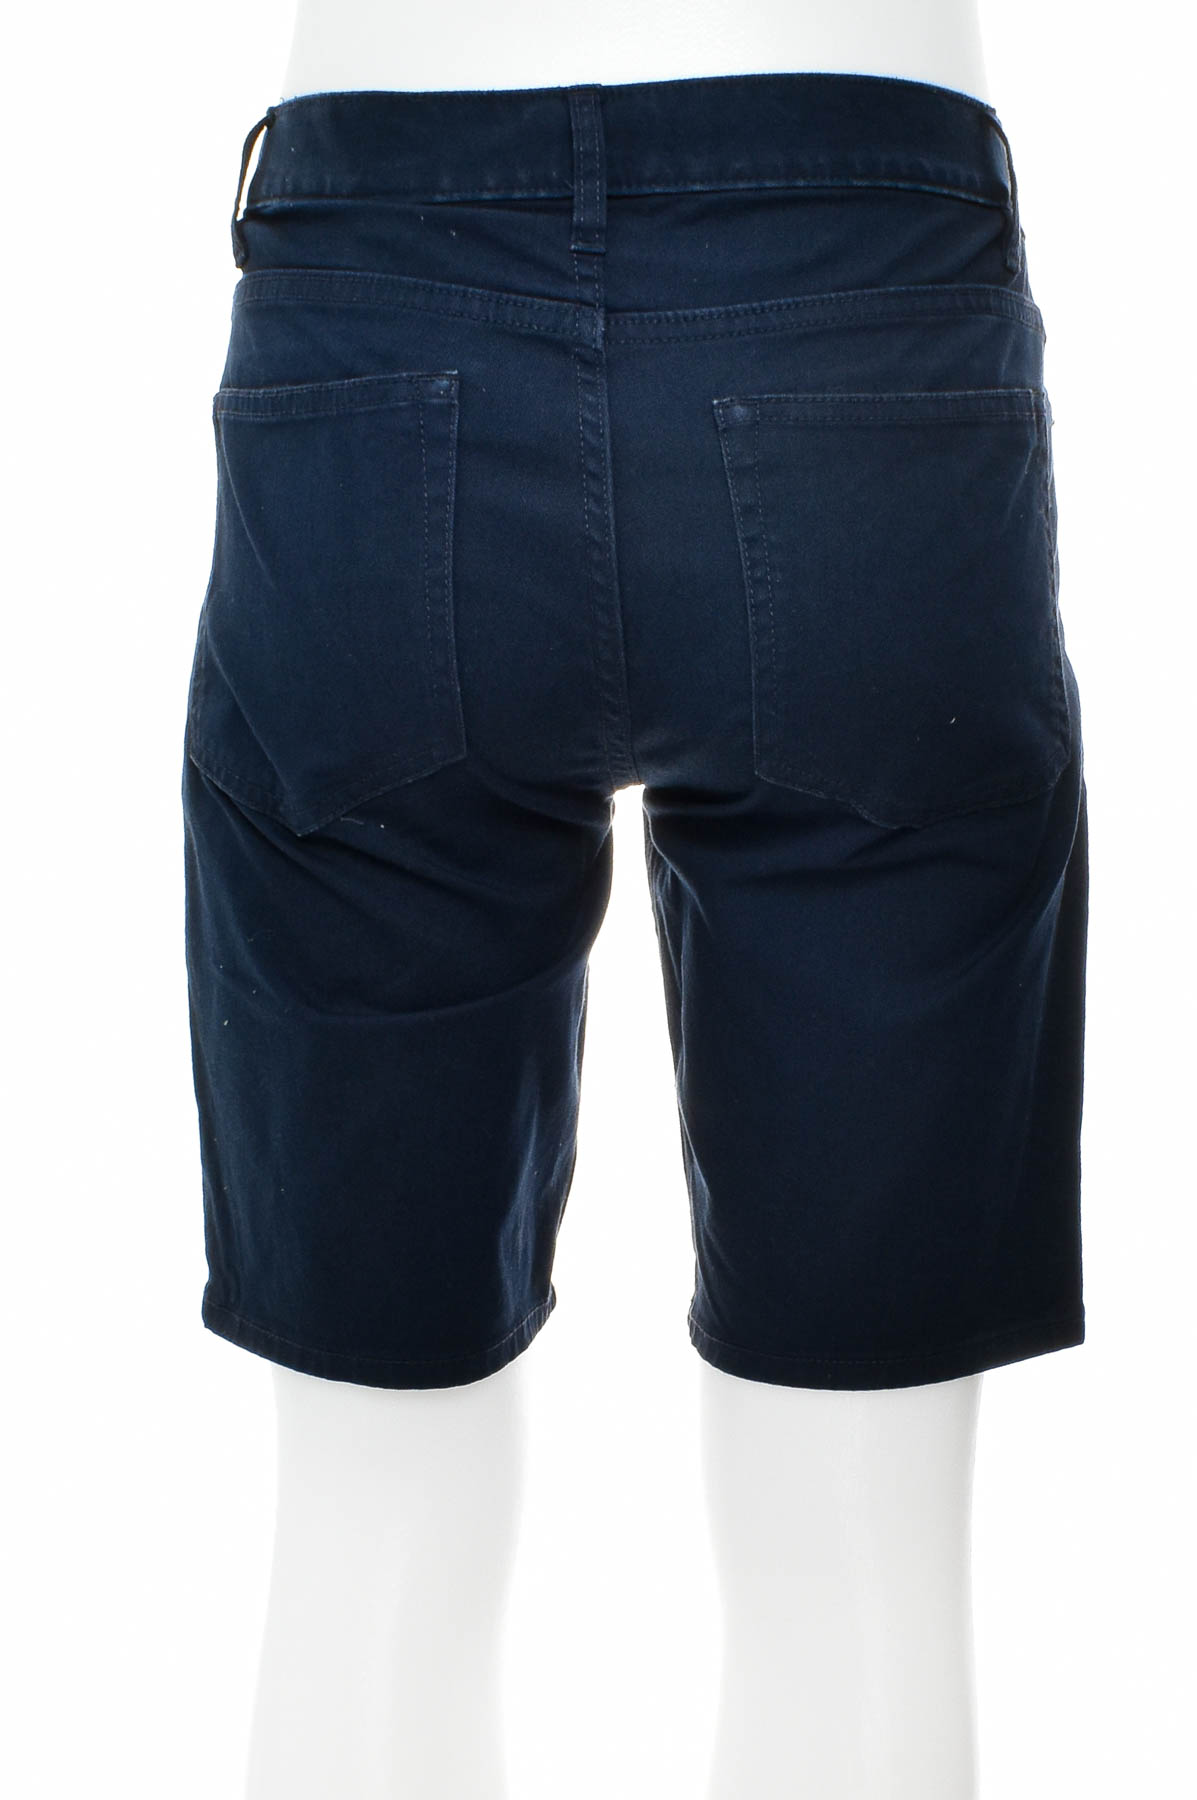 Men's shorts - H&M - 1